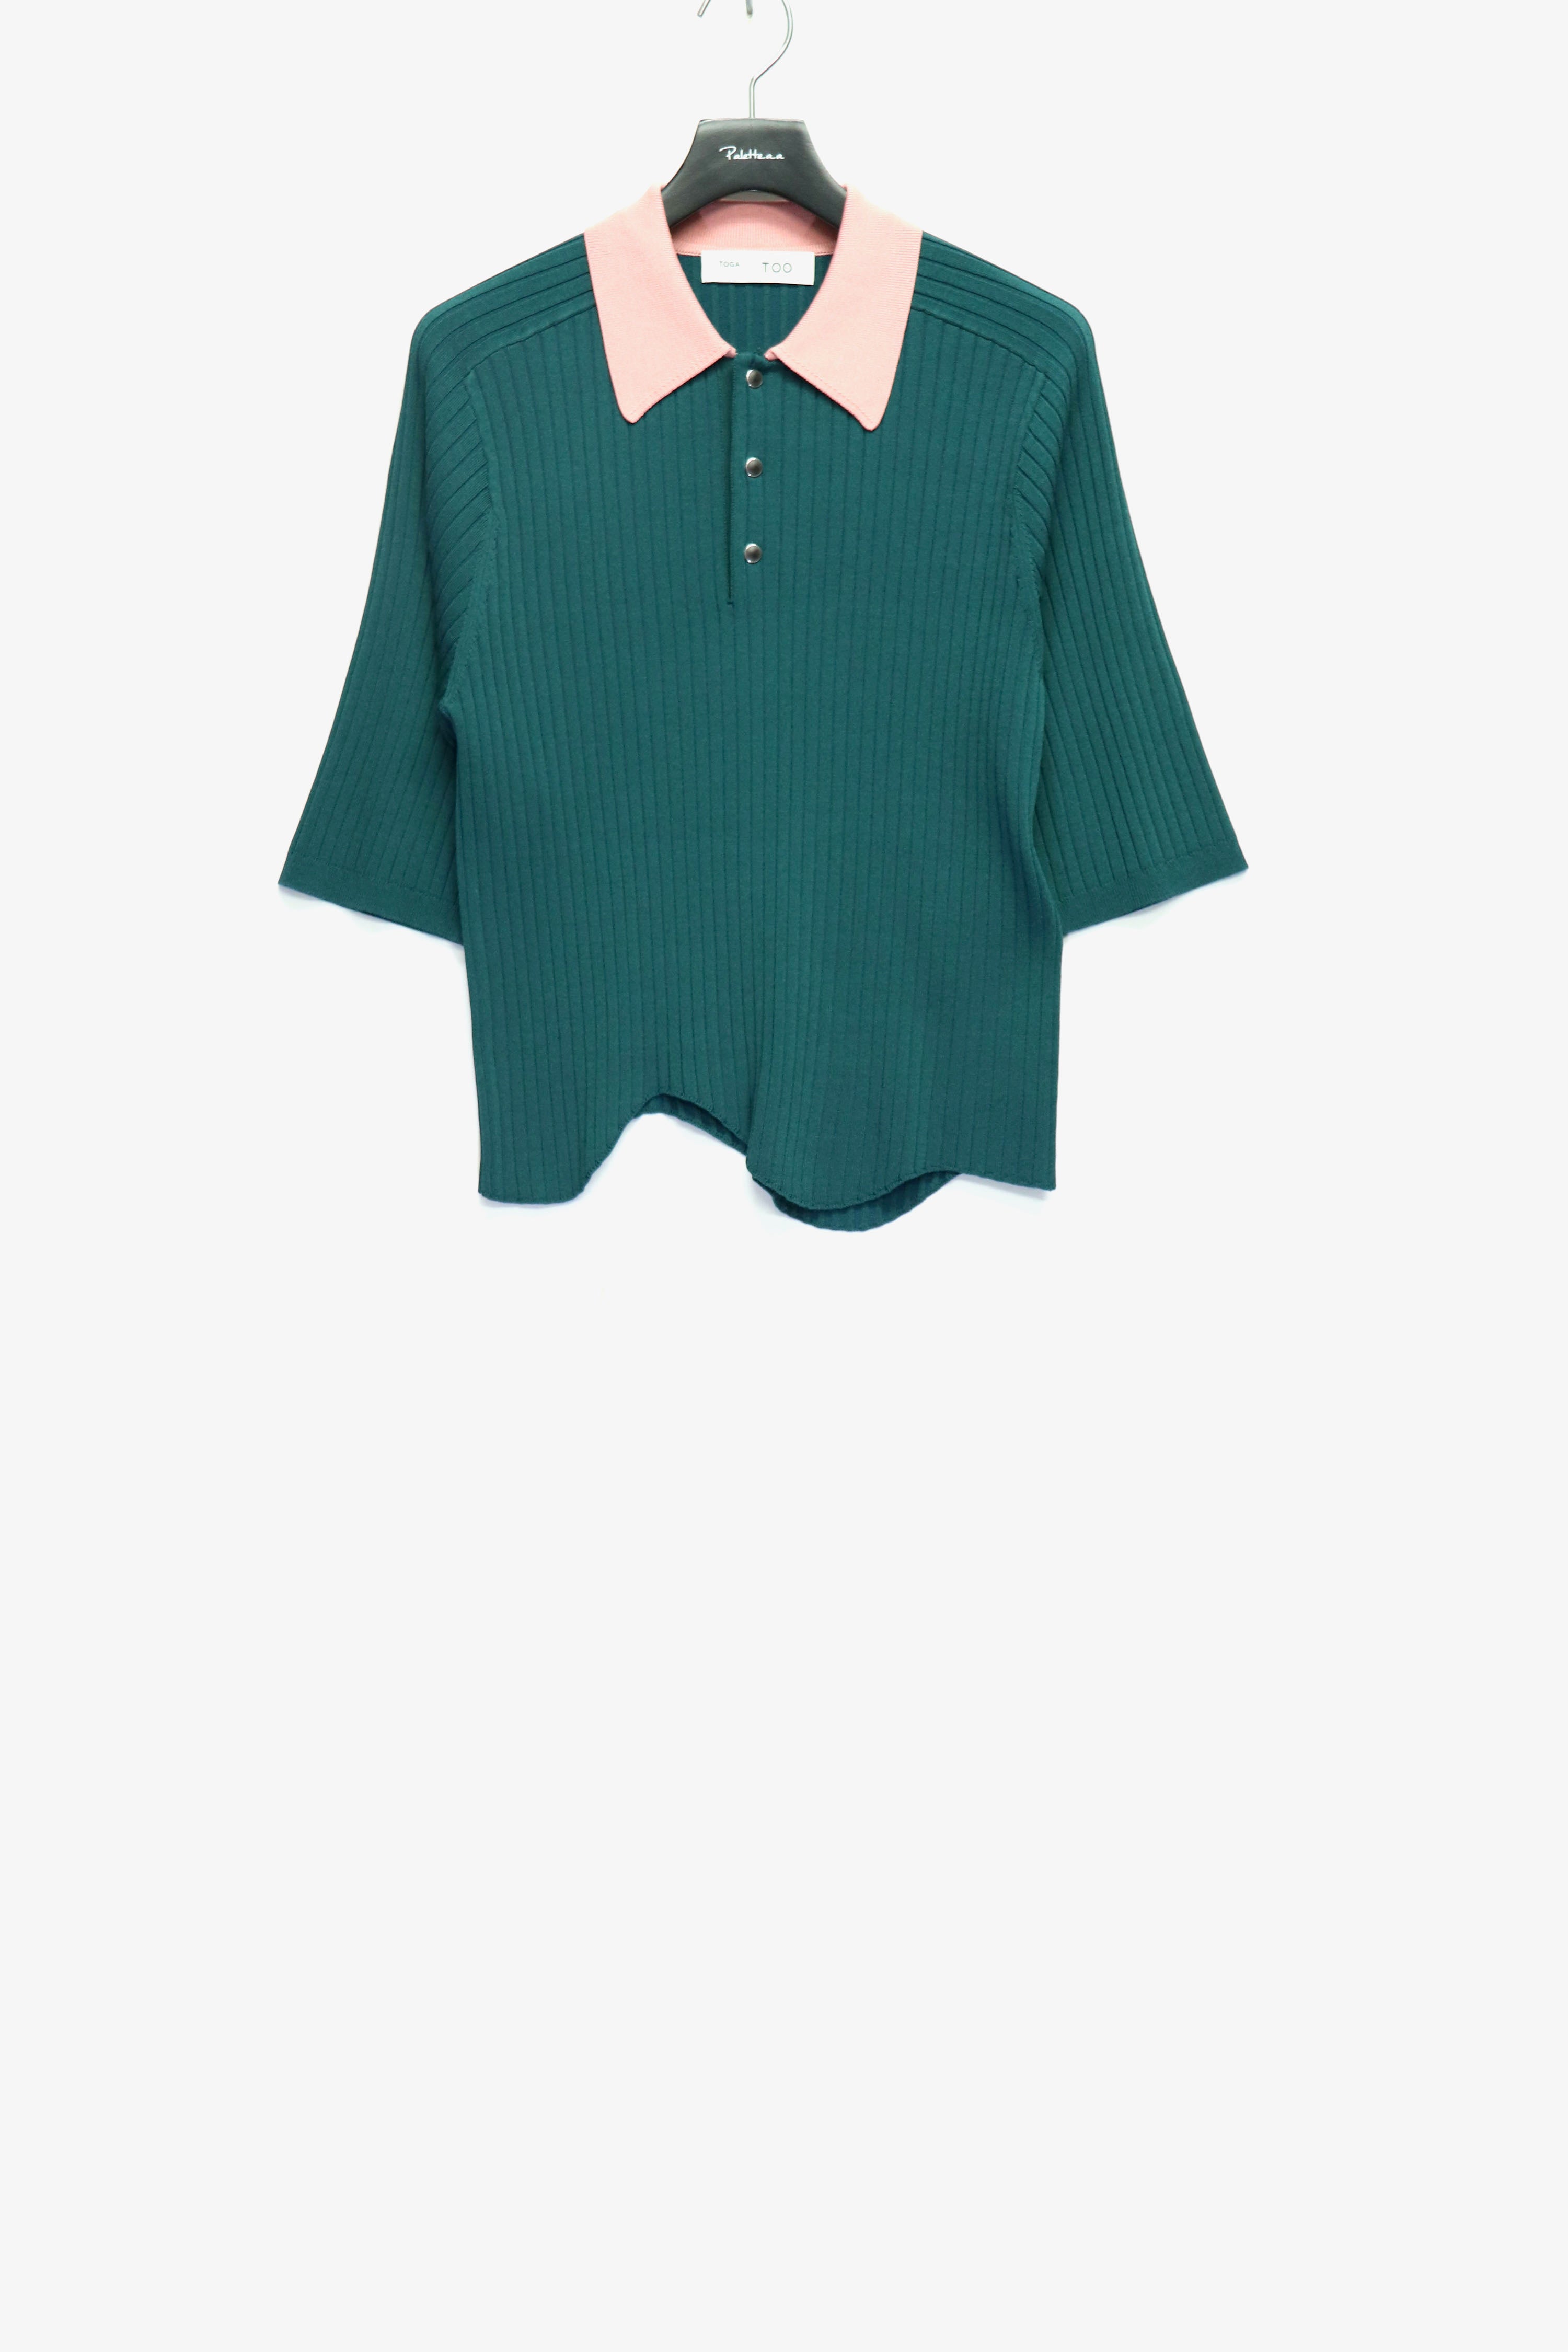 TOGA VIRILIS(トーガ ビリリース)のWave knit polo shirtの通販 